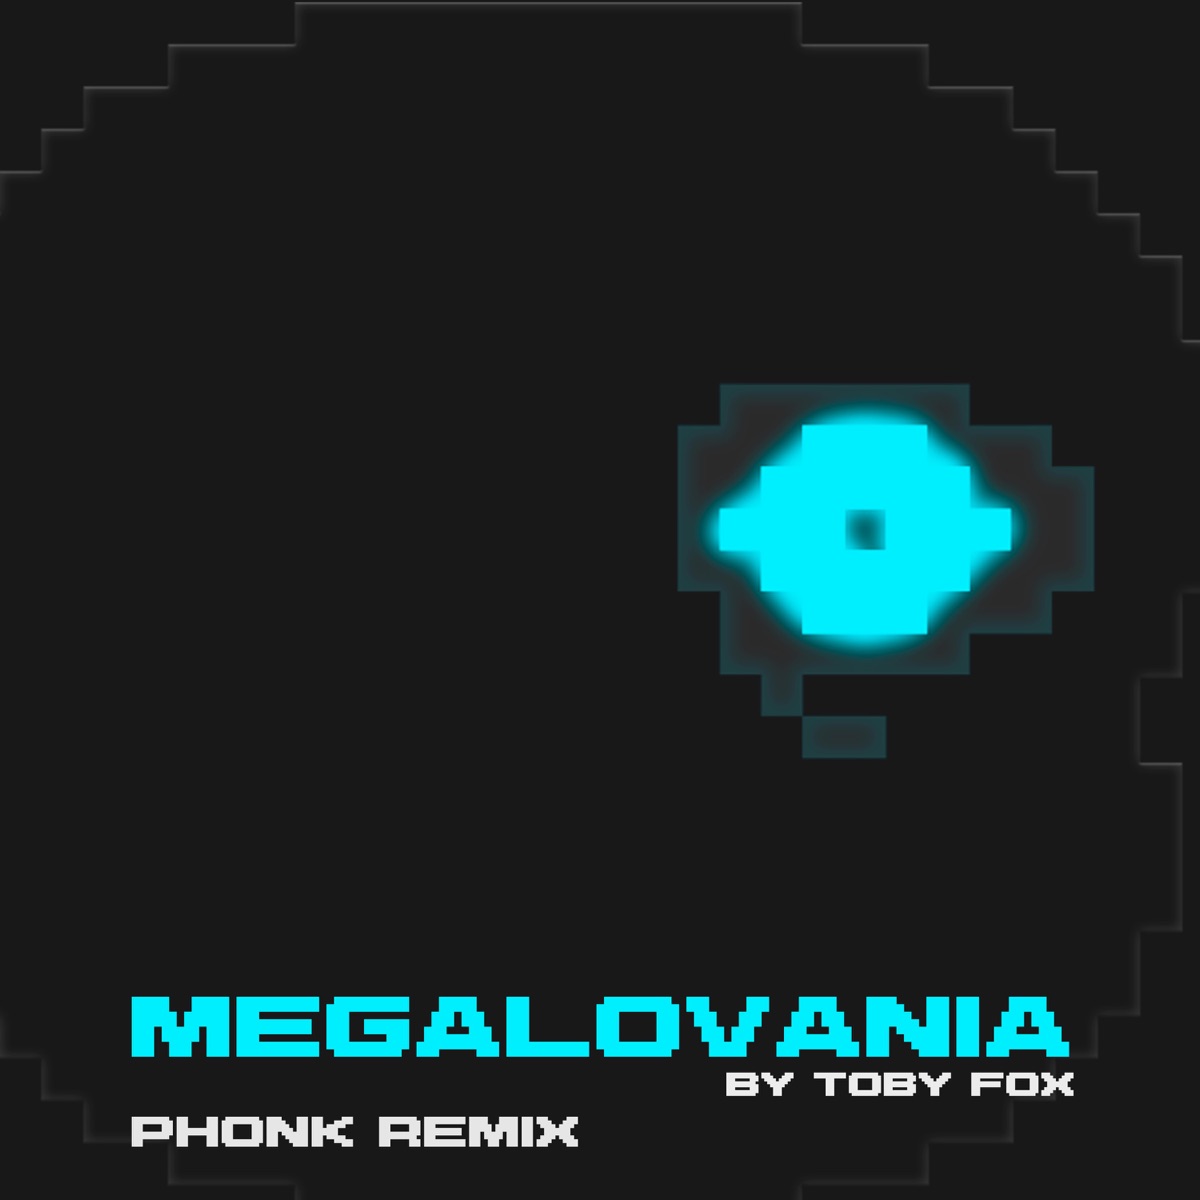 Megalovania 10 hours remix